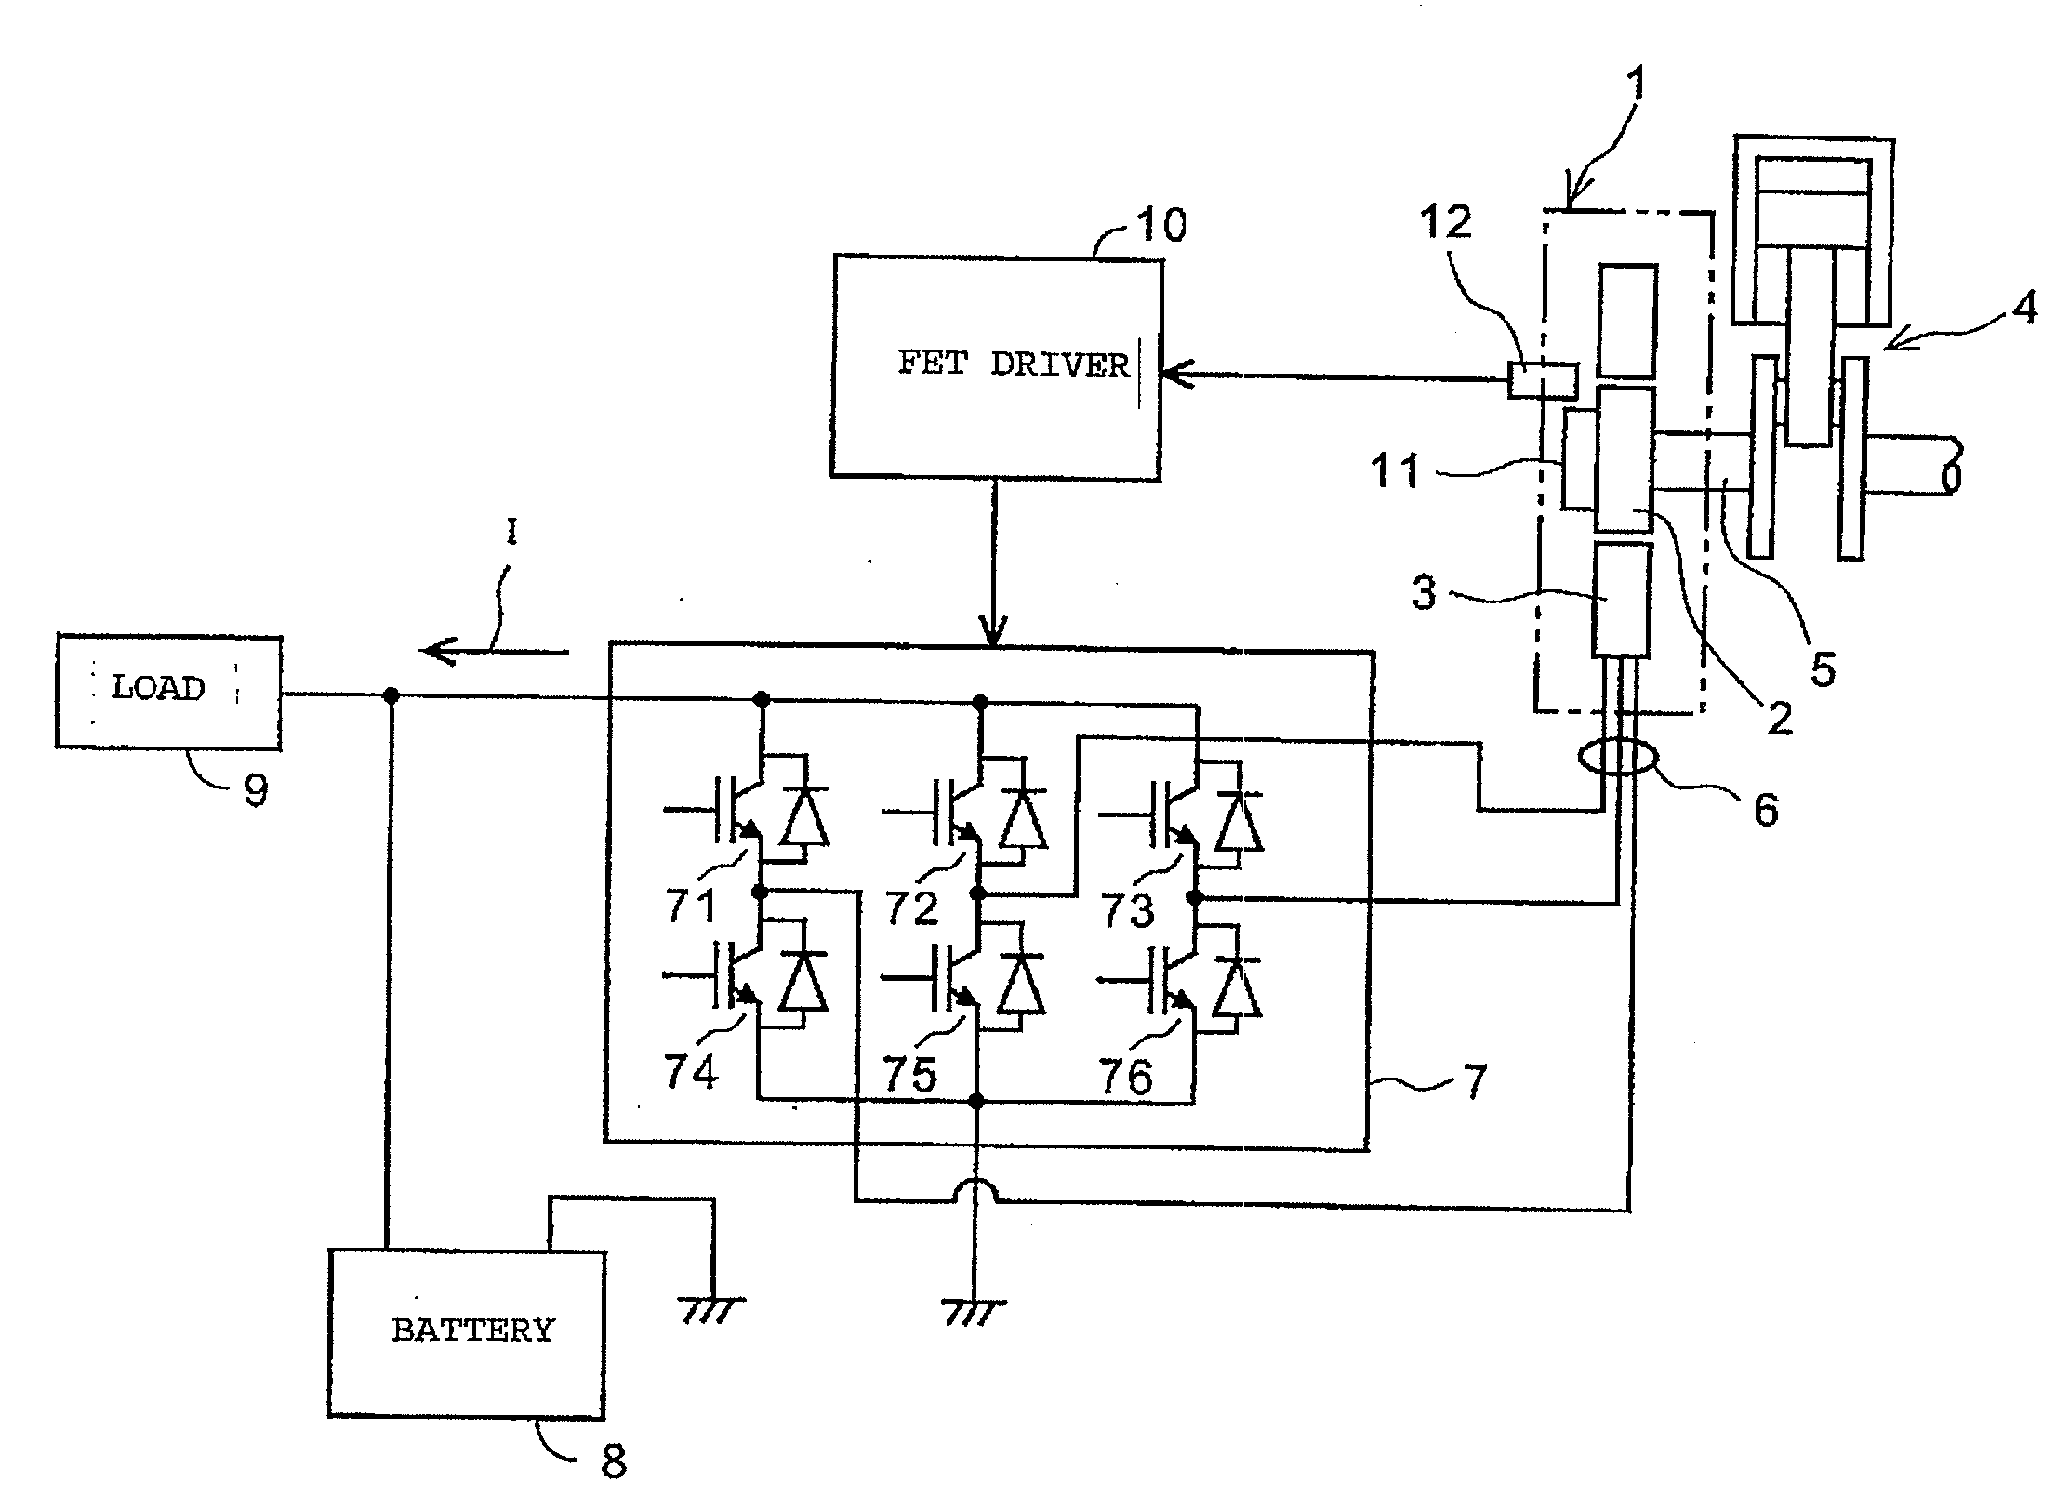 Power generation control device